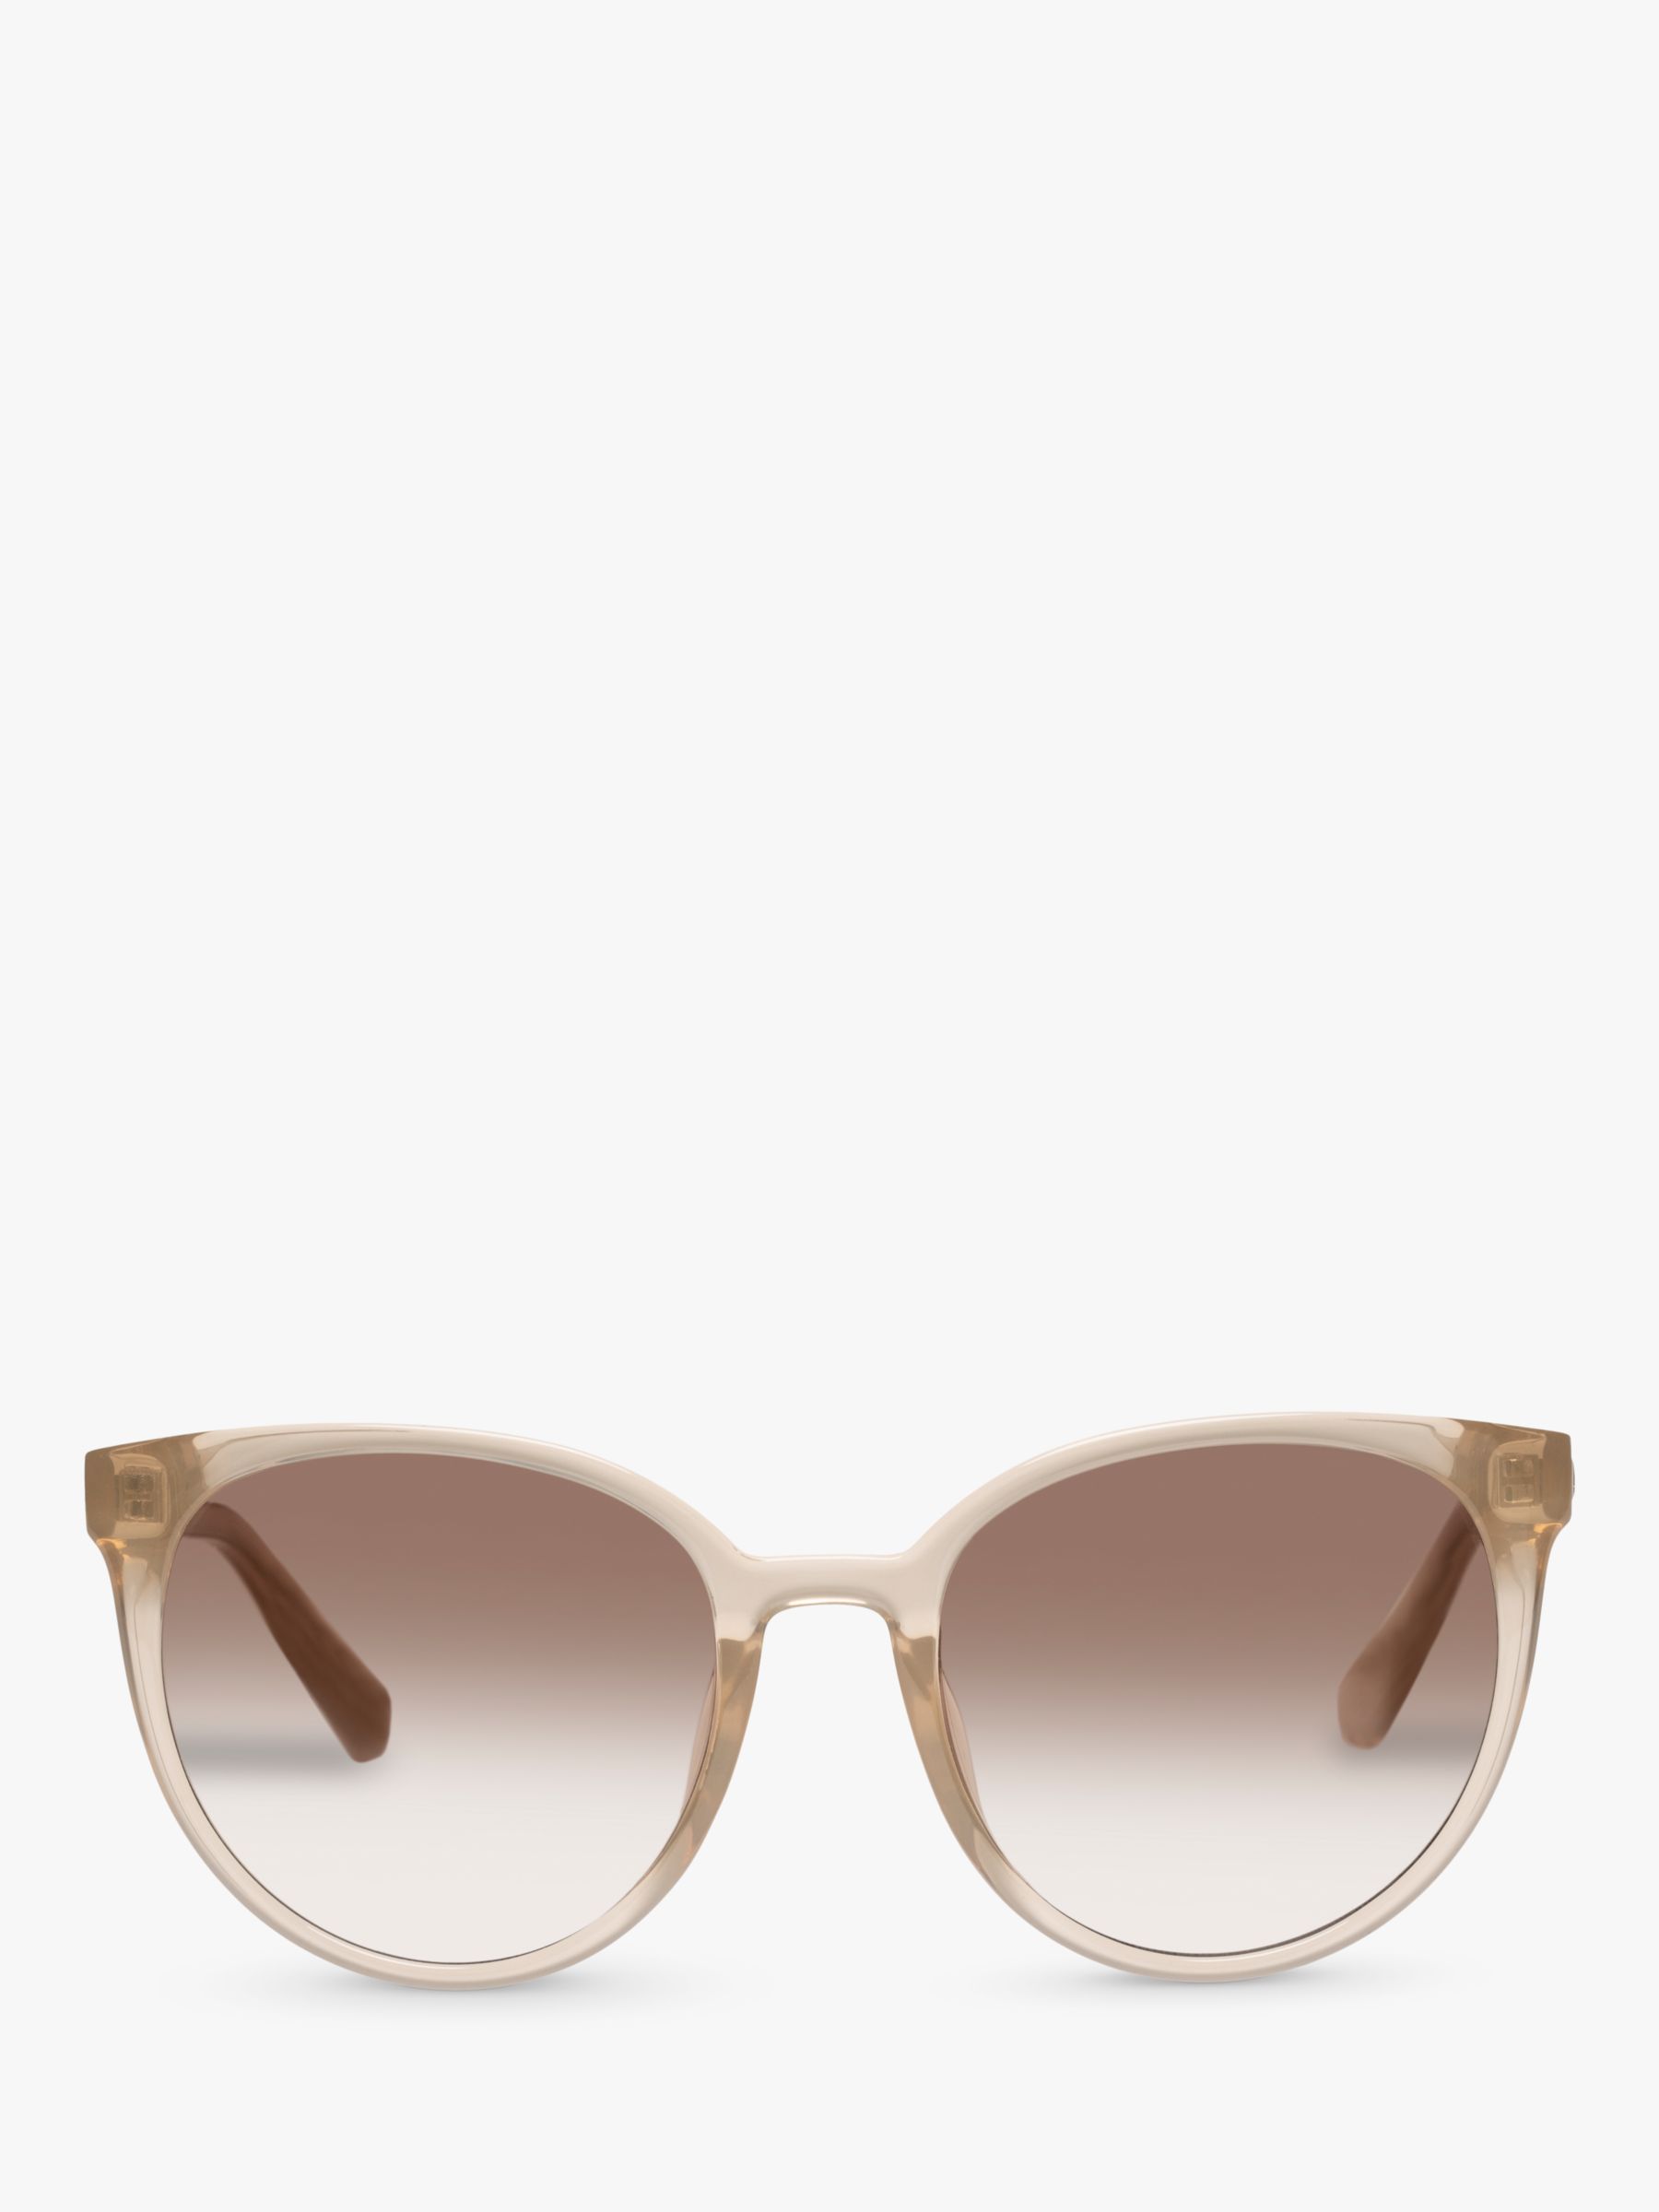 Buy Le Specs L5000171 Women's Armada Round Sunglasses, Clear Beige/Beige Gradient Online at johnlewis.com